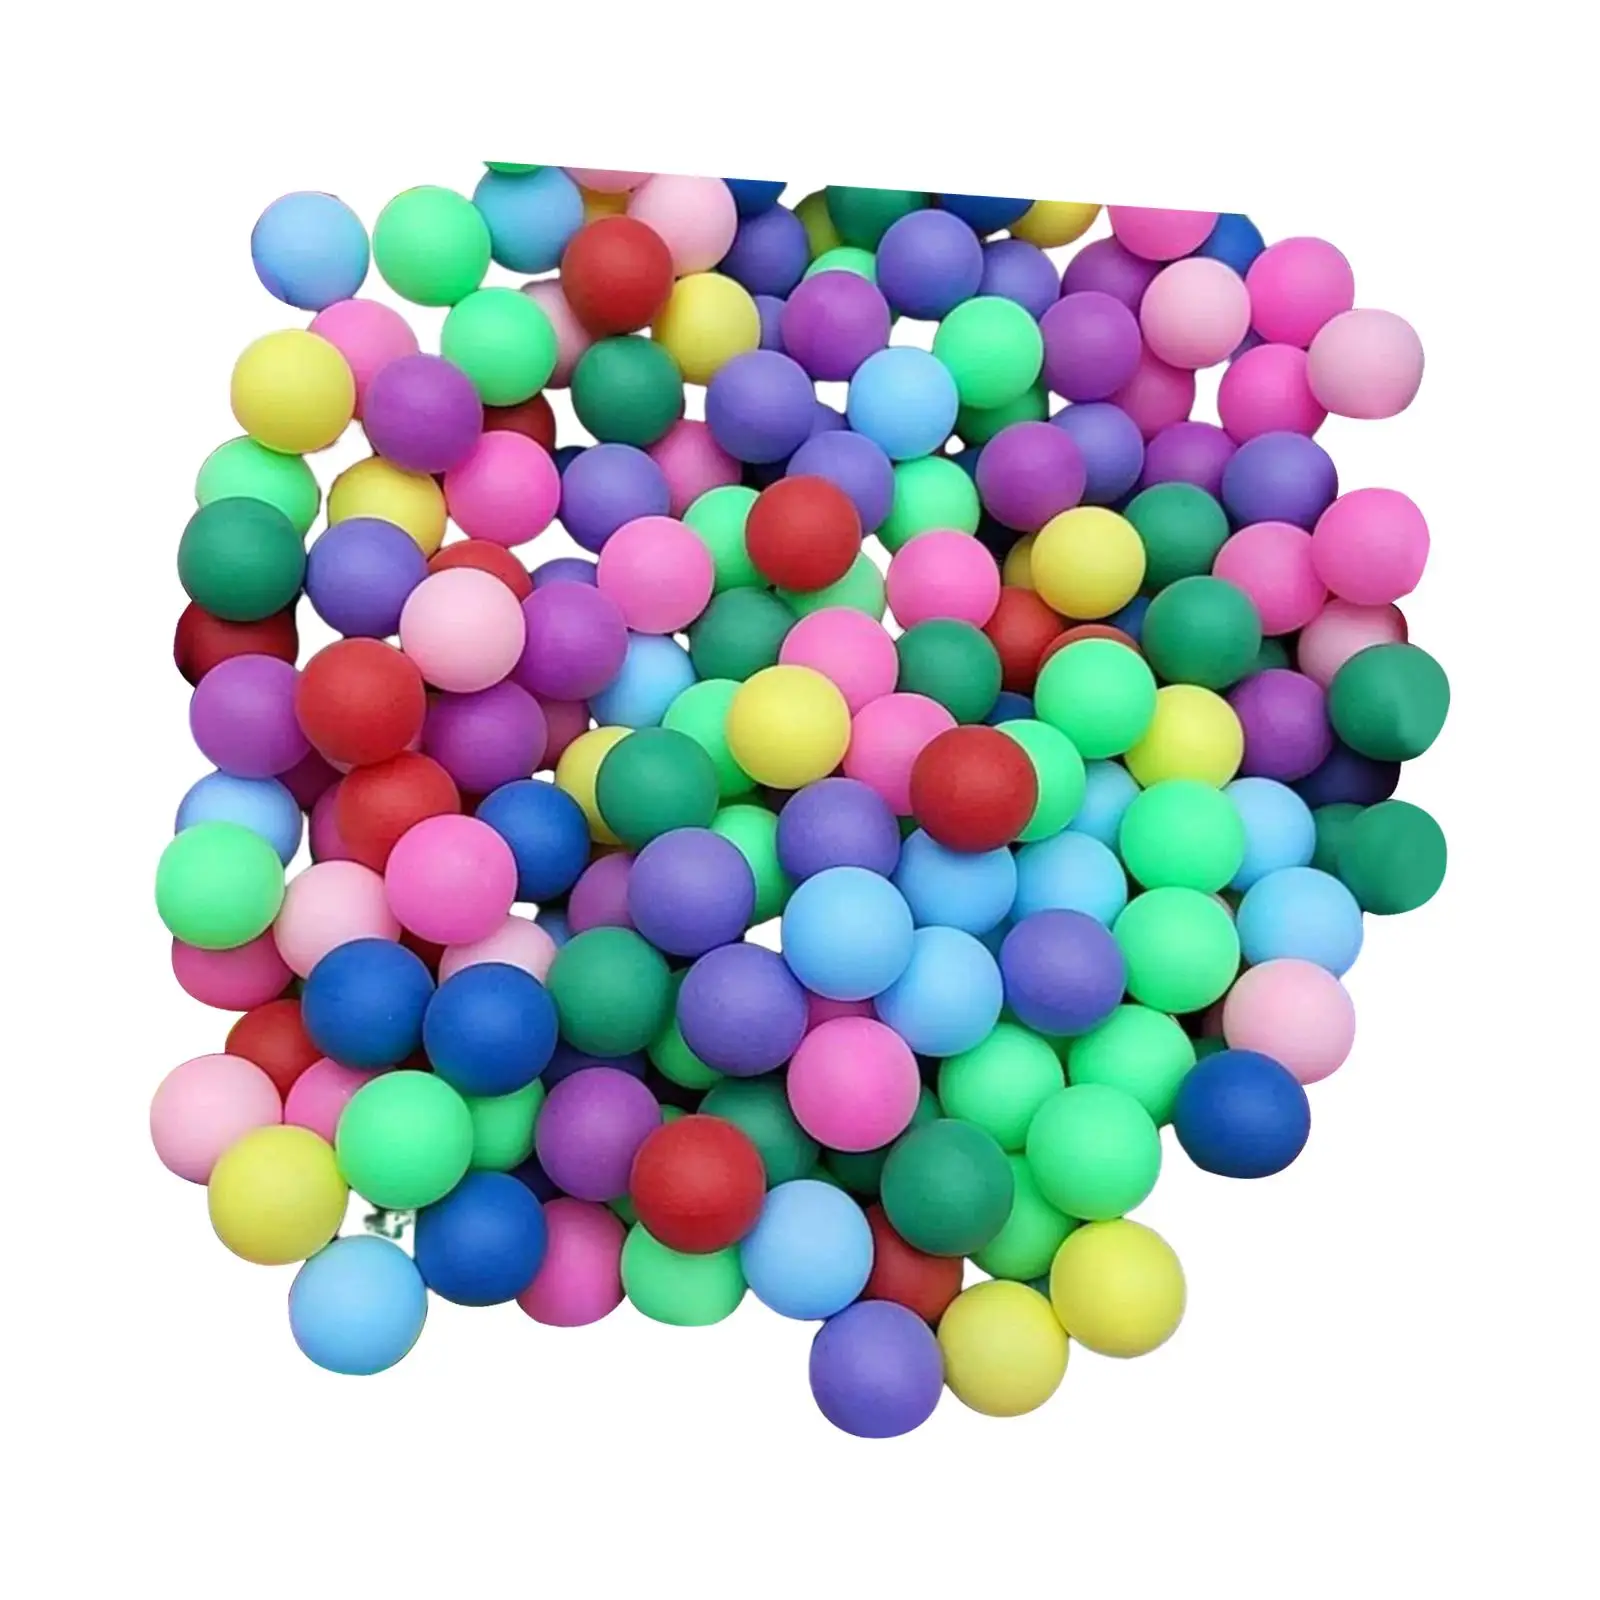 150x 40mm Table Tennis Balls Ping Pong Balls Swing Balls Game Colorful Bouncy